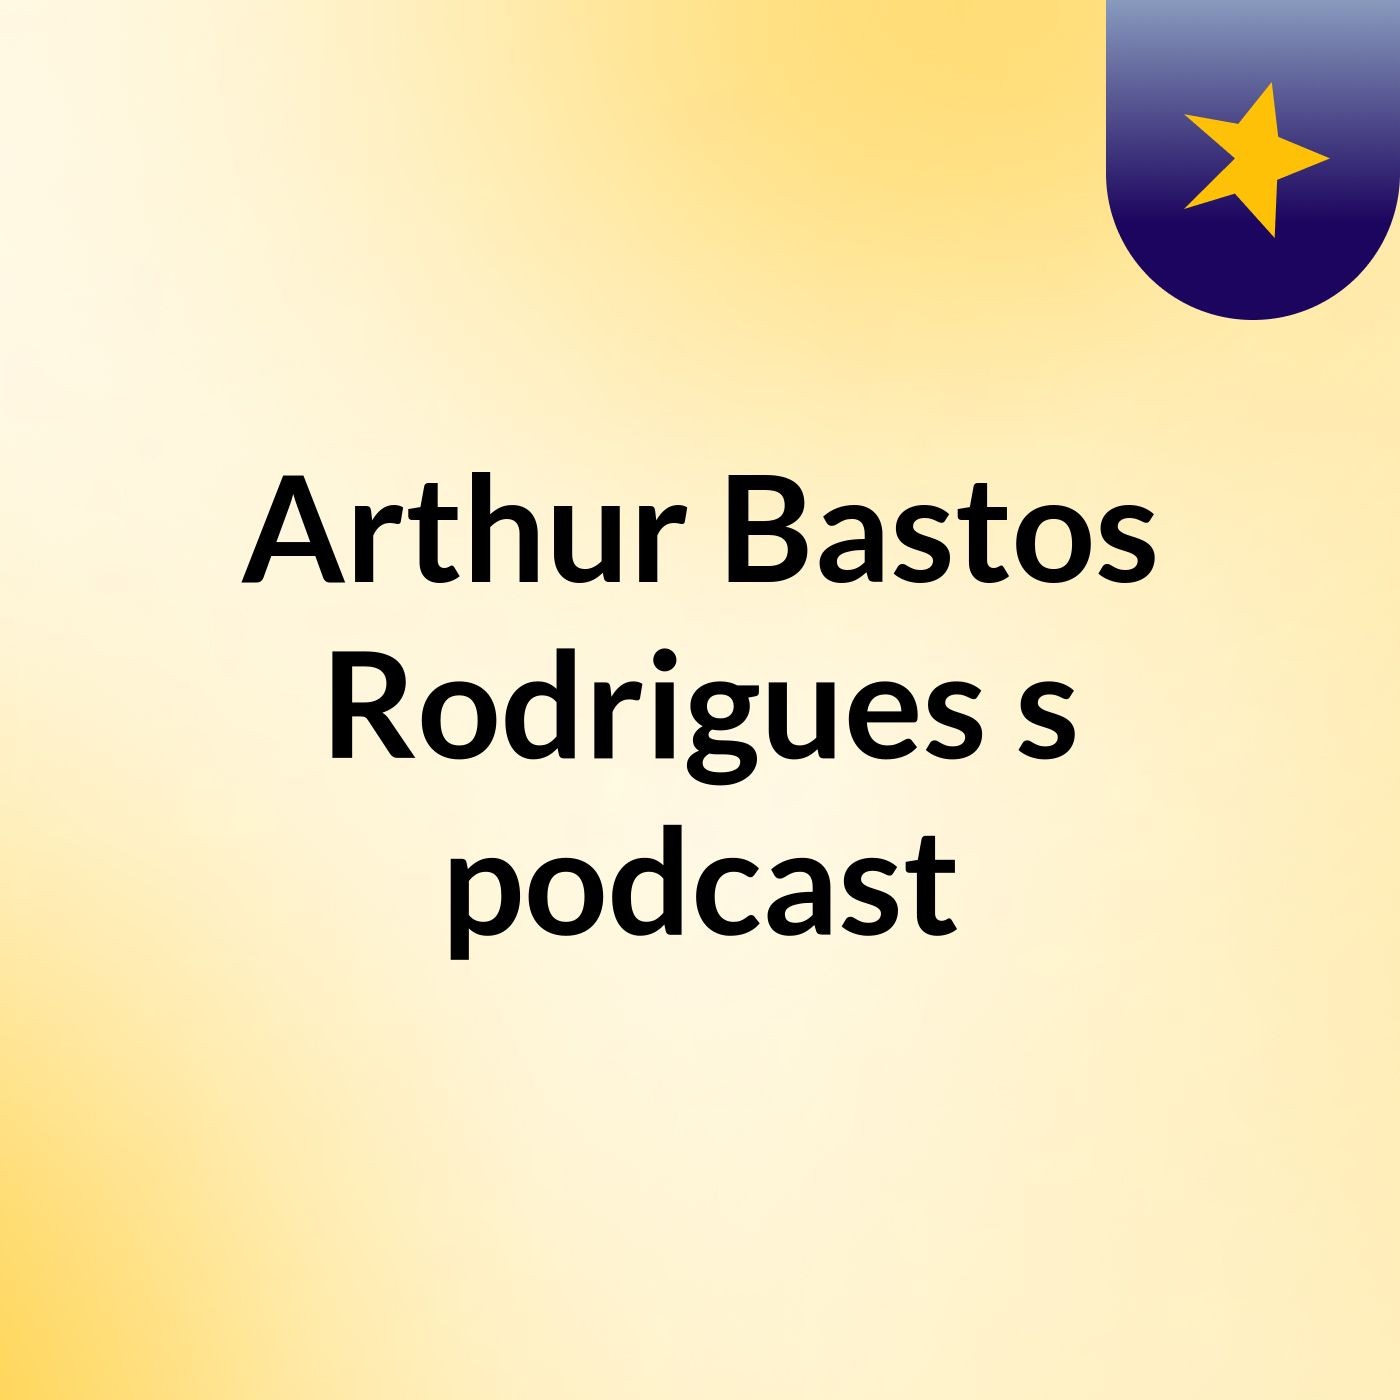 Arthur Bastos Rodrigues's podcast